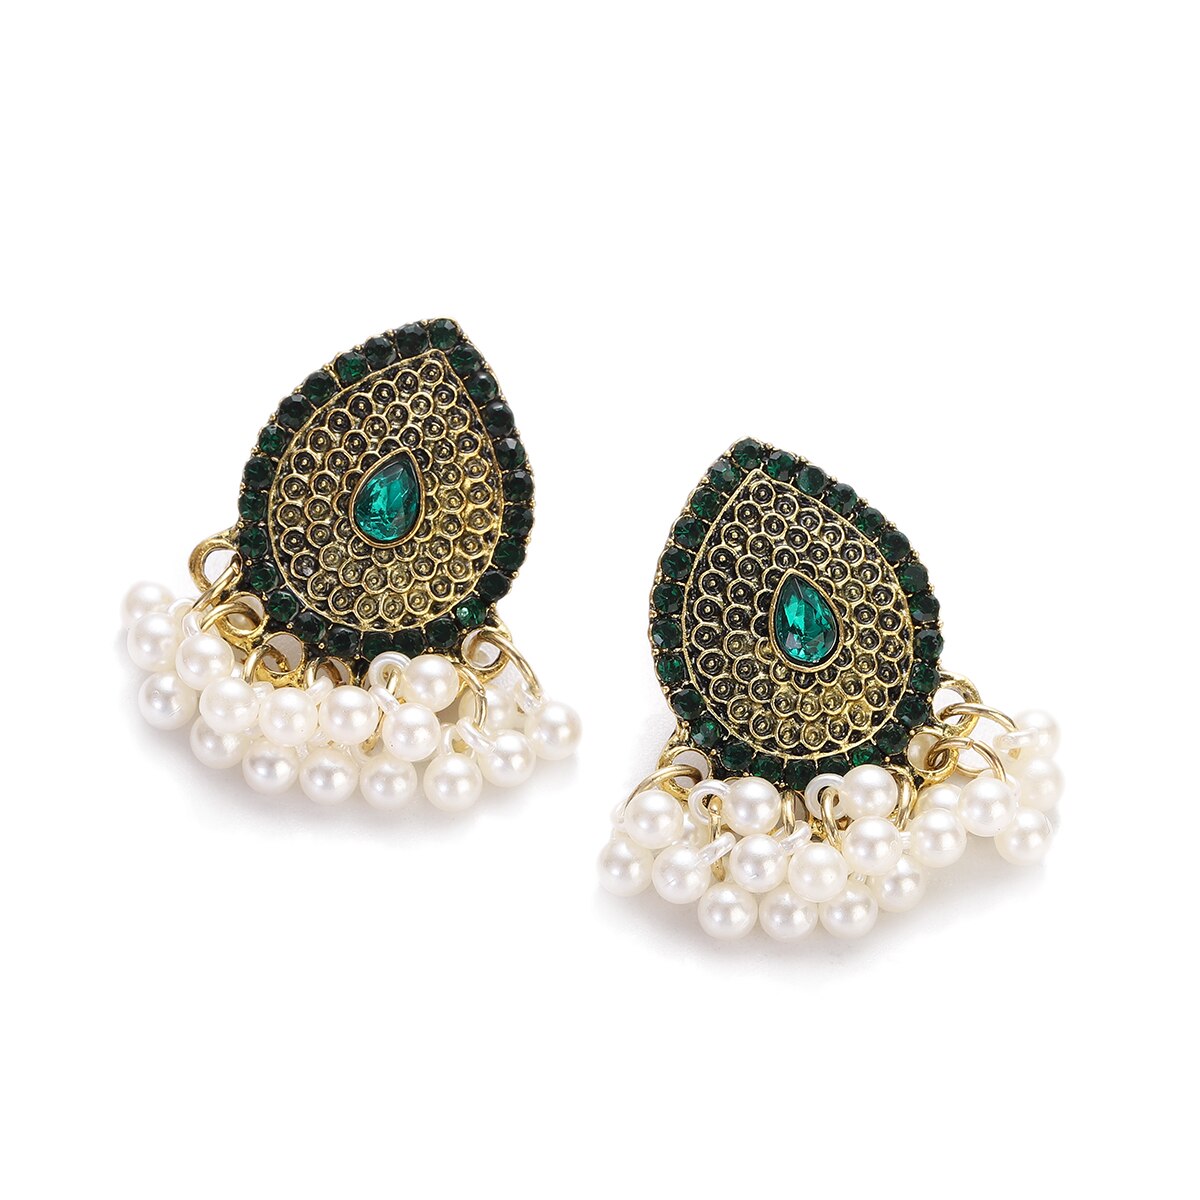 Luxury-White-CZ-Water-Drop-Earrings-For-Women-Ethnic-Vintage-Bohemian-Gold-Color-Statement-Earrings-1005004700736114-3